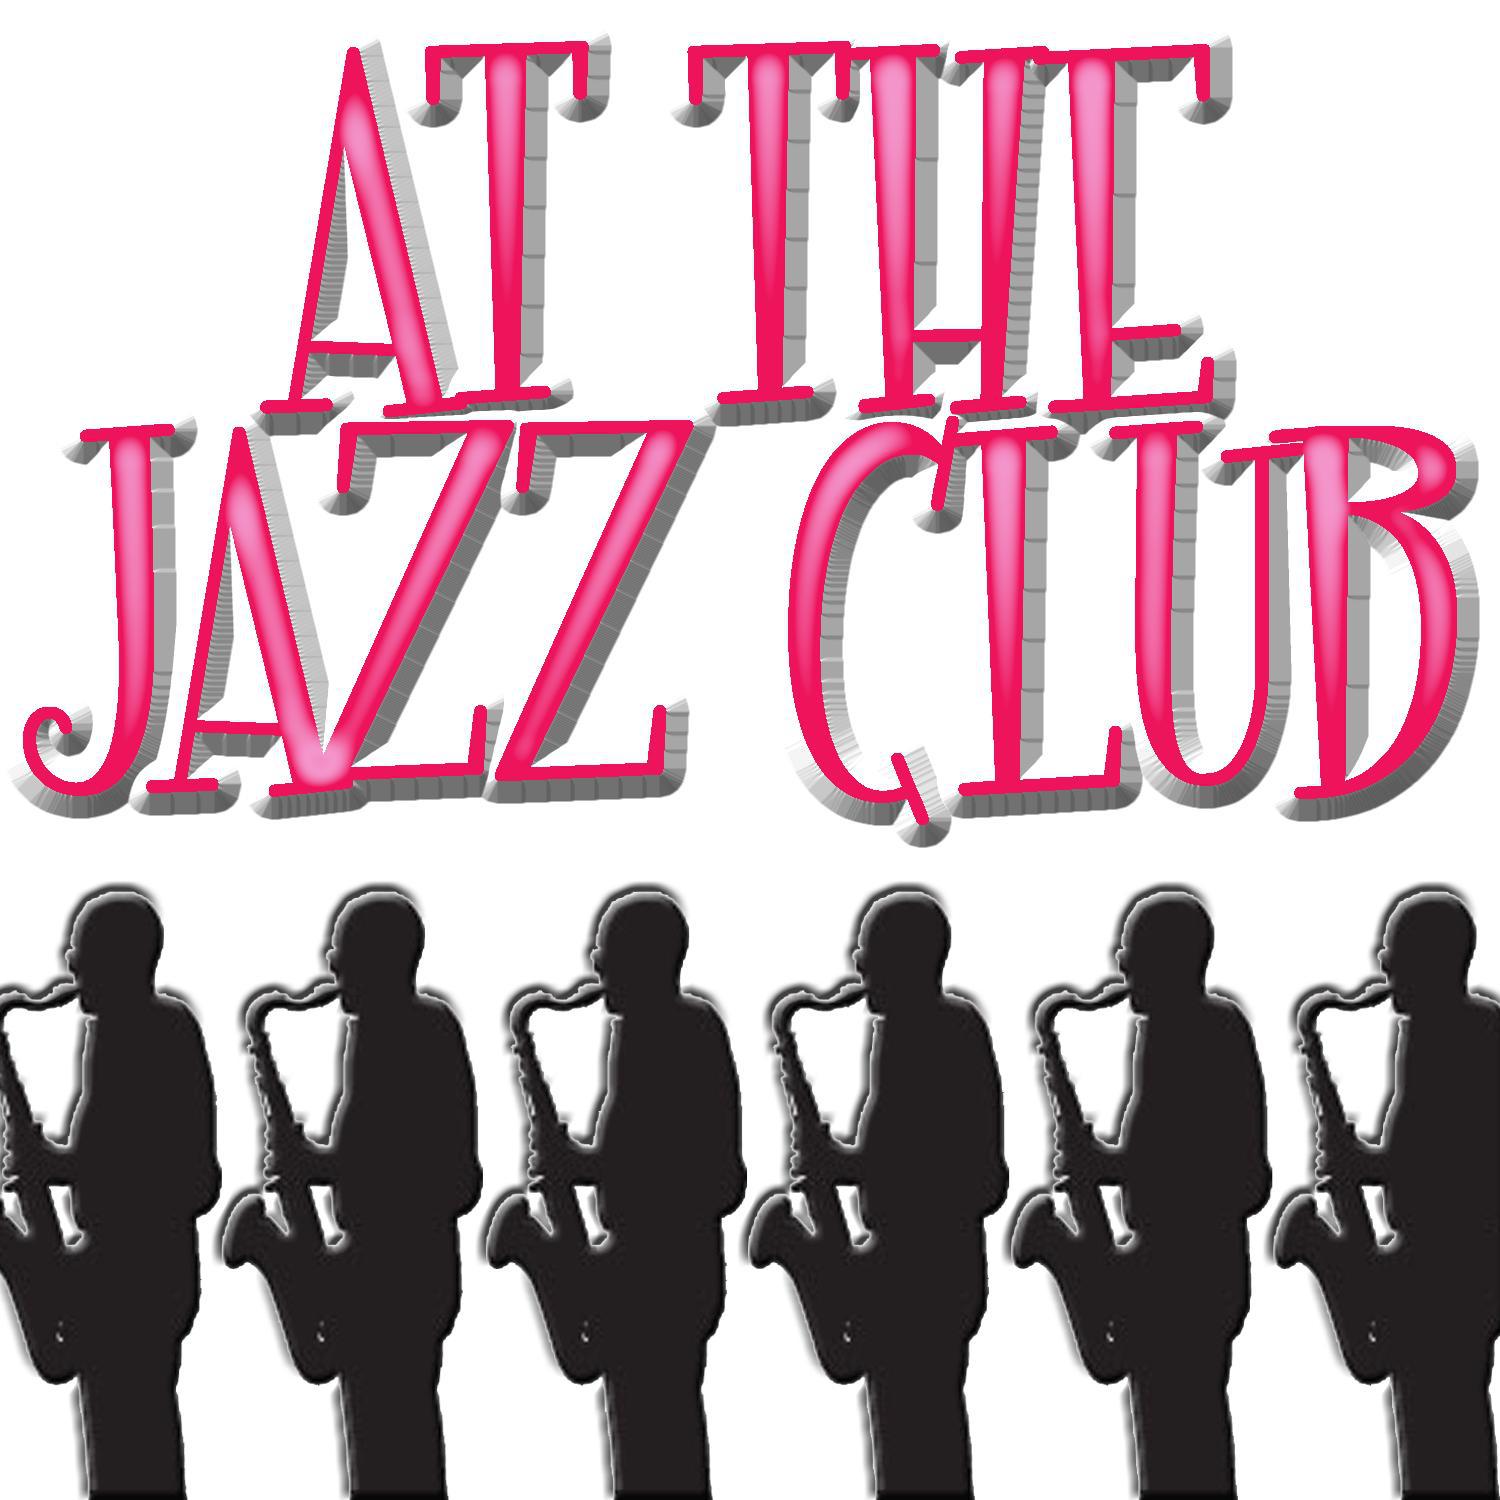 At The Jazz Club